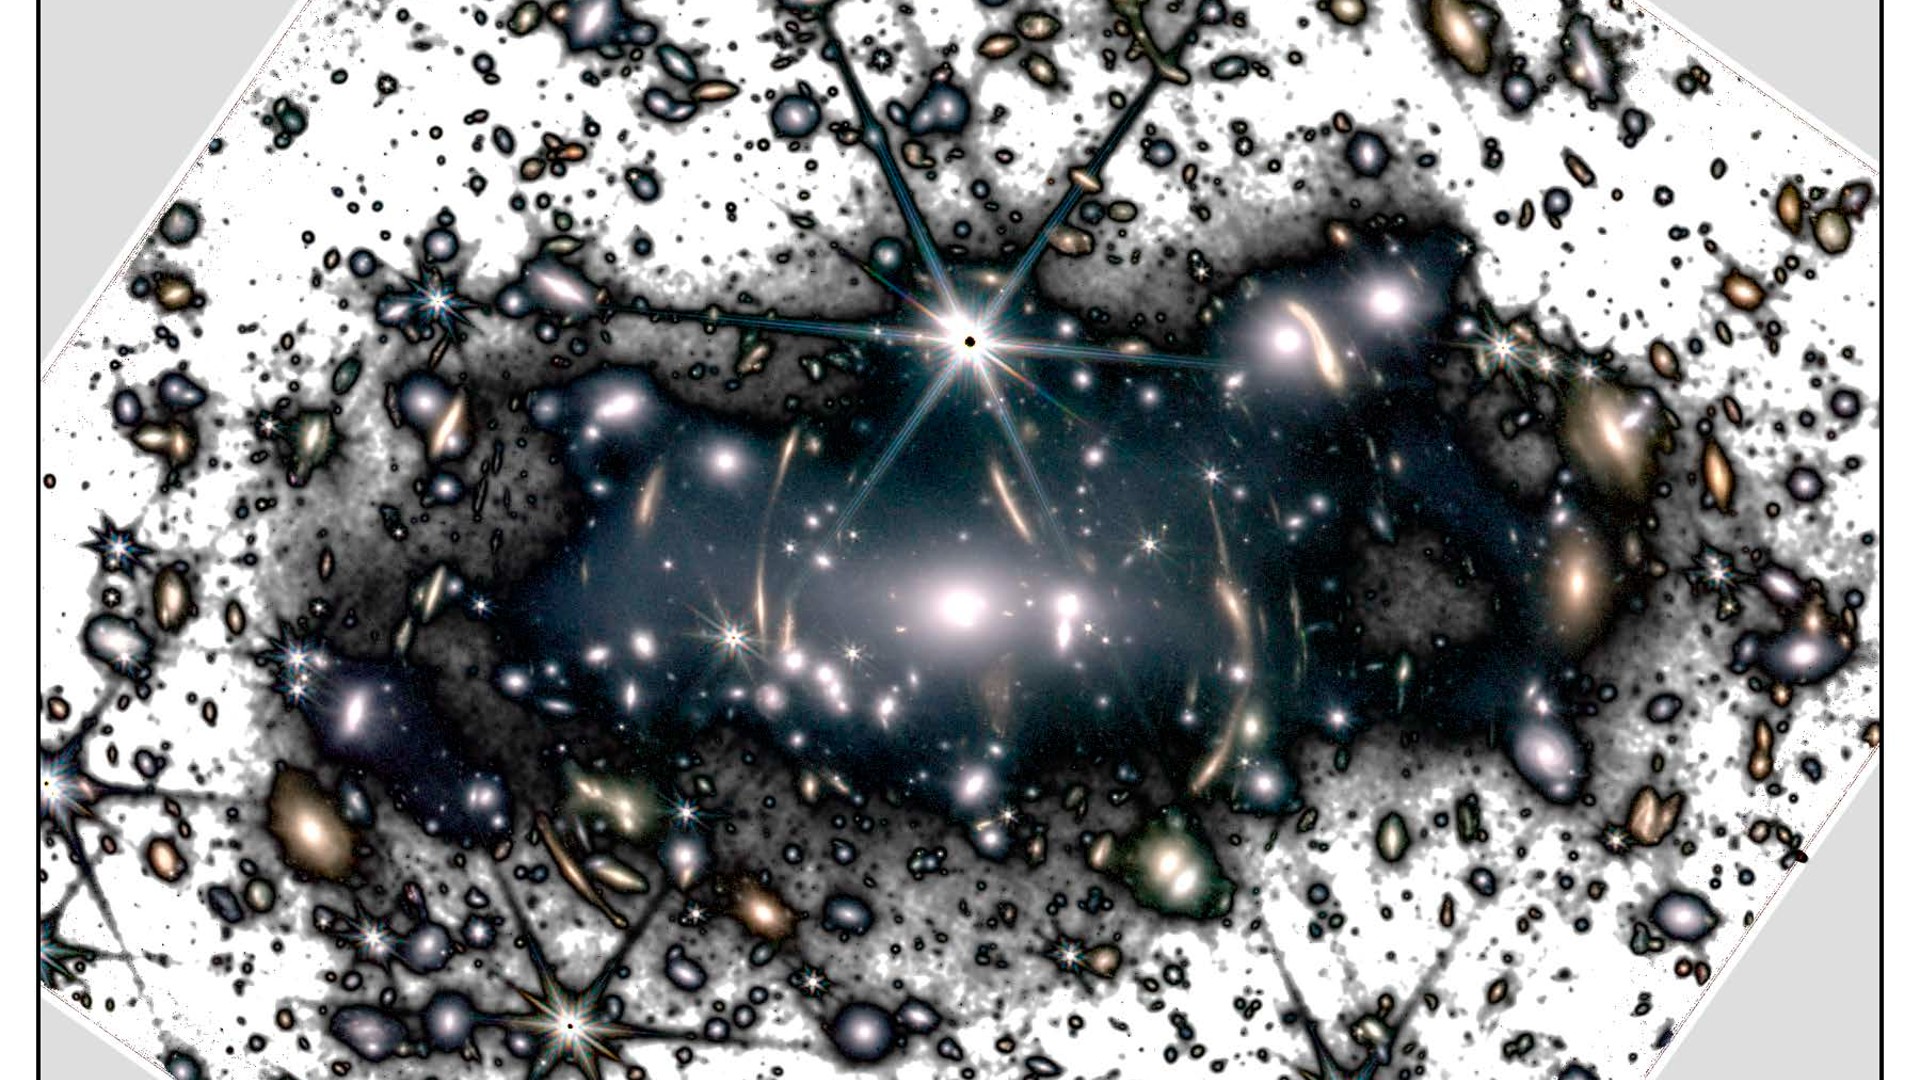 James Webb Space Telescope peers into the 'ghostly light' of interstellar space